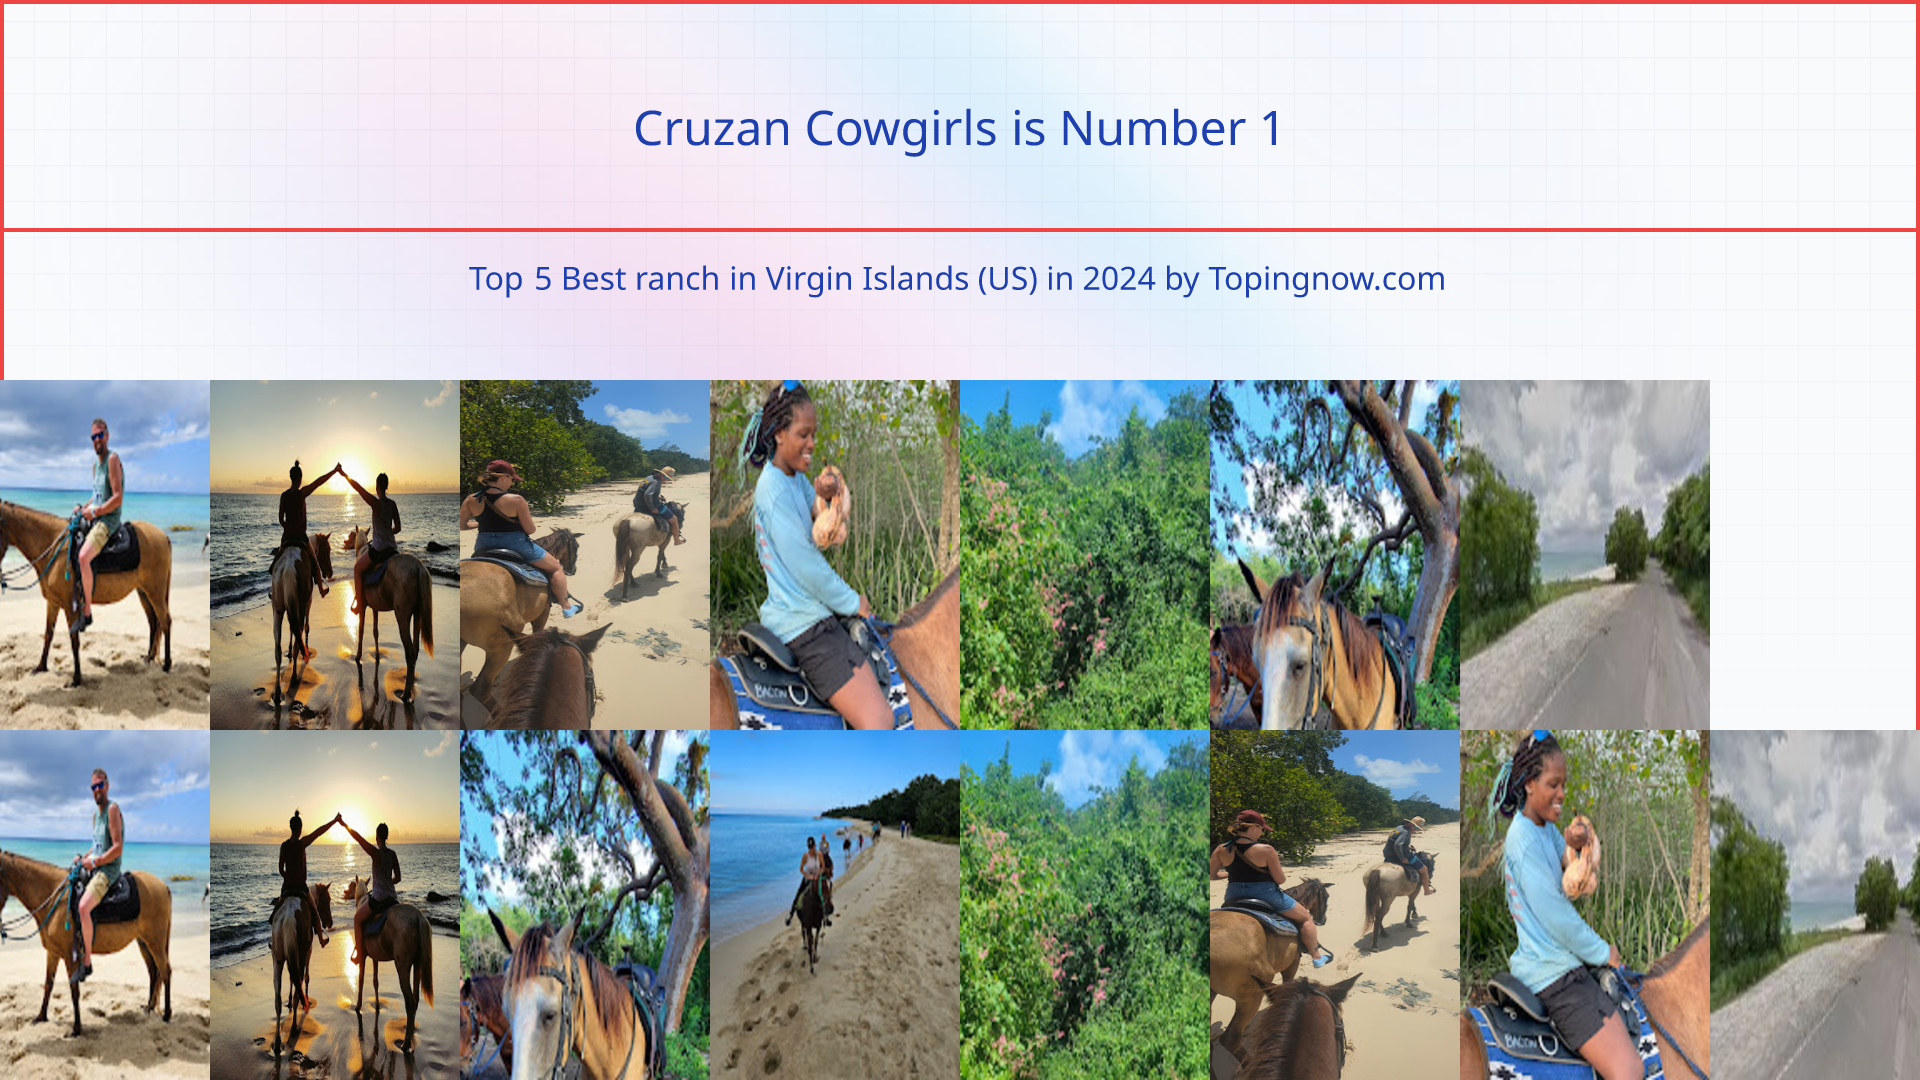 Cruzan Cowgirls: Top 5 Best ranch in Virgin Islands (US) in 2024